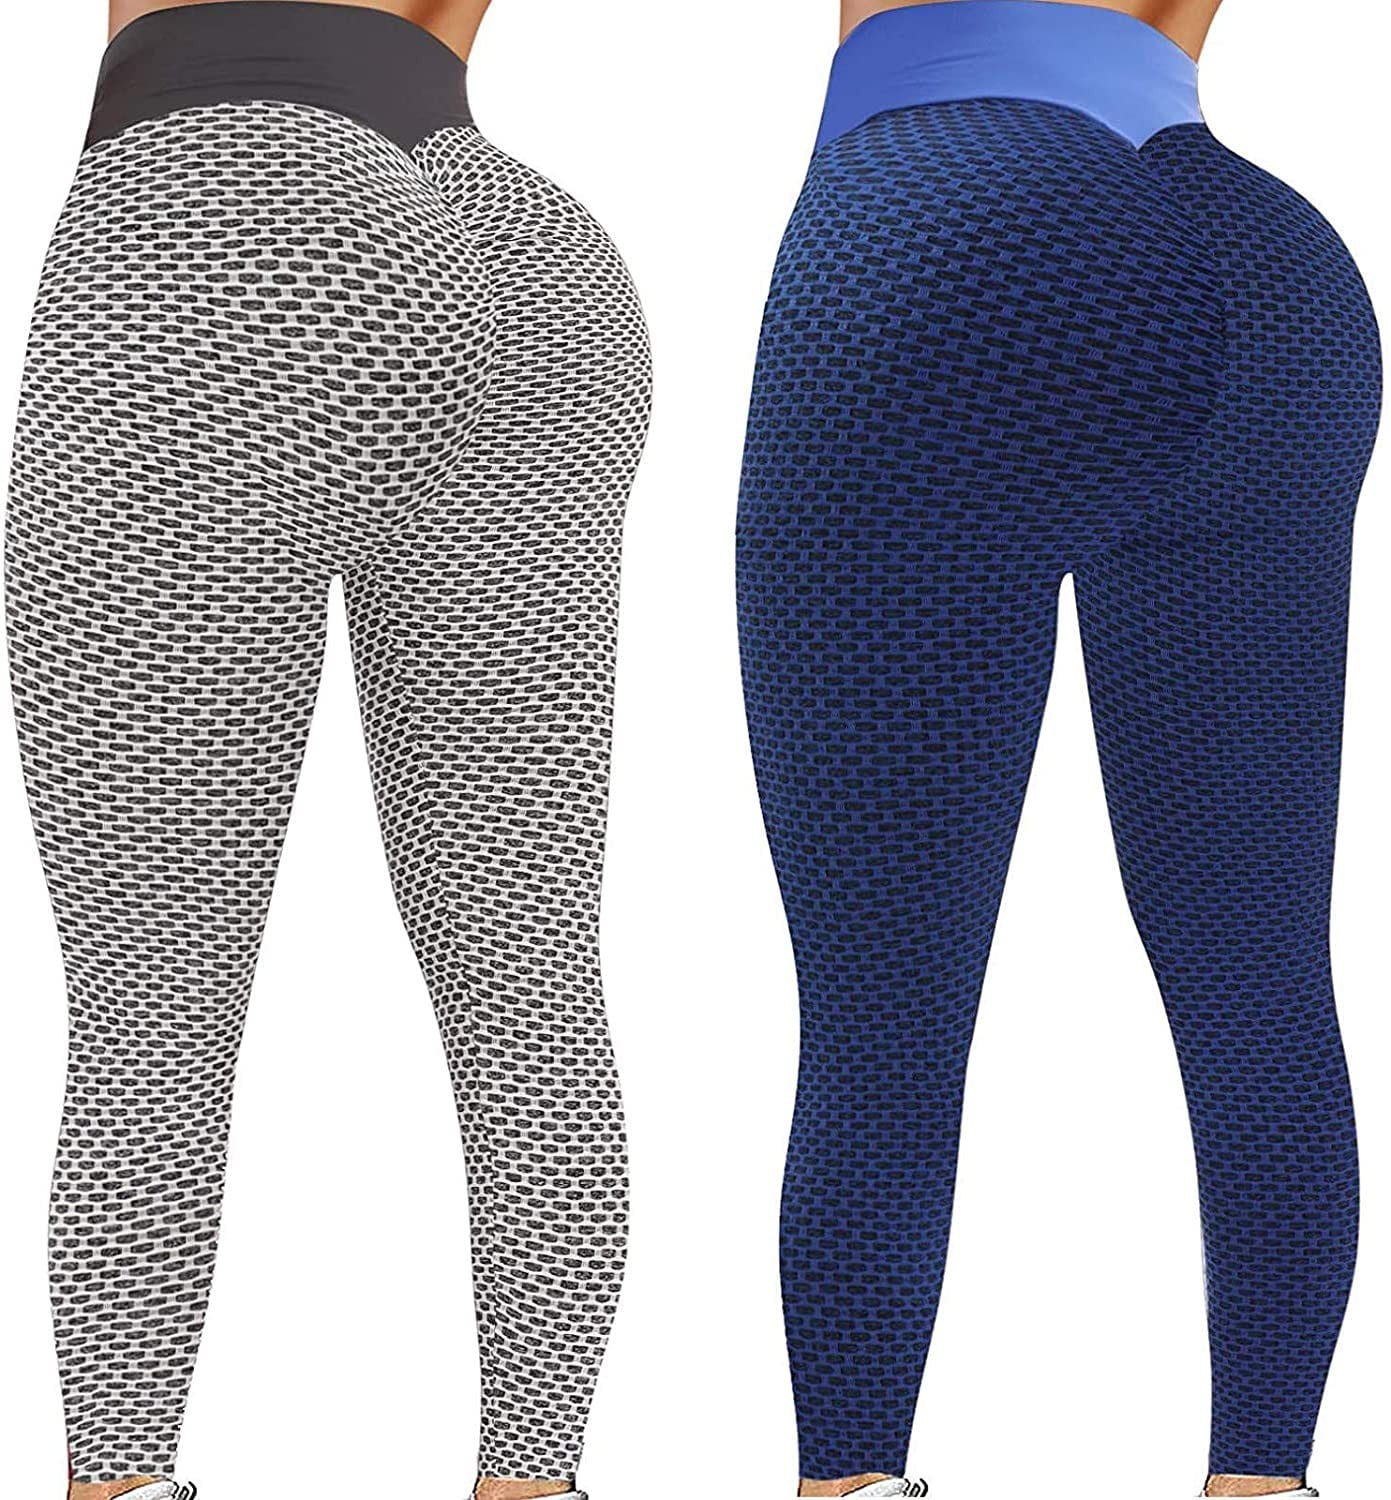 EHQJNJ Leggings Plus Size Yoga Pants Women Casual Fashion Tight High Waist  Sports Yoga Pants Bee Festival Printed Leggings 